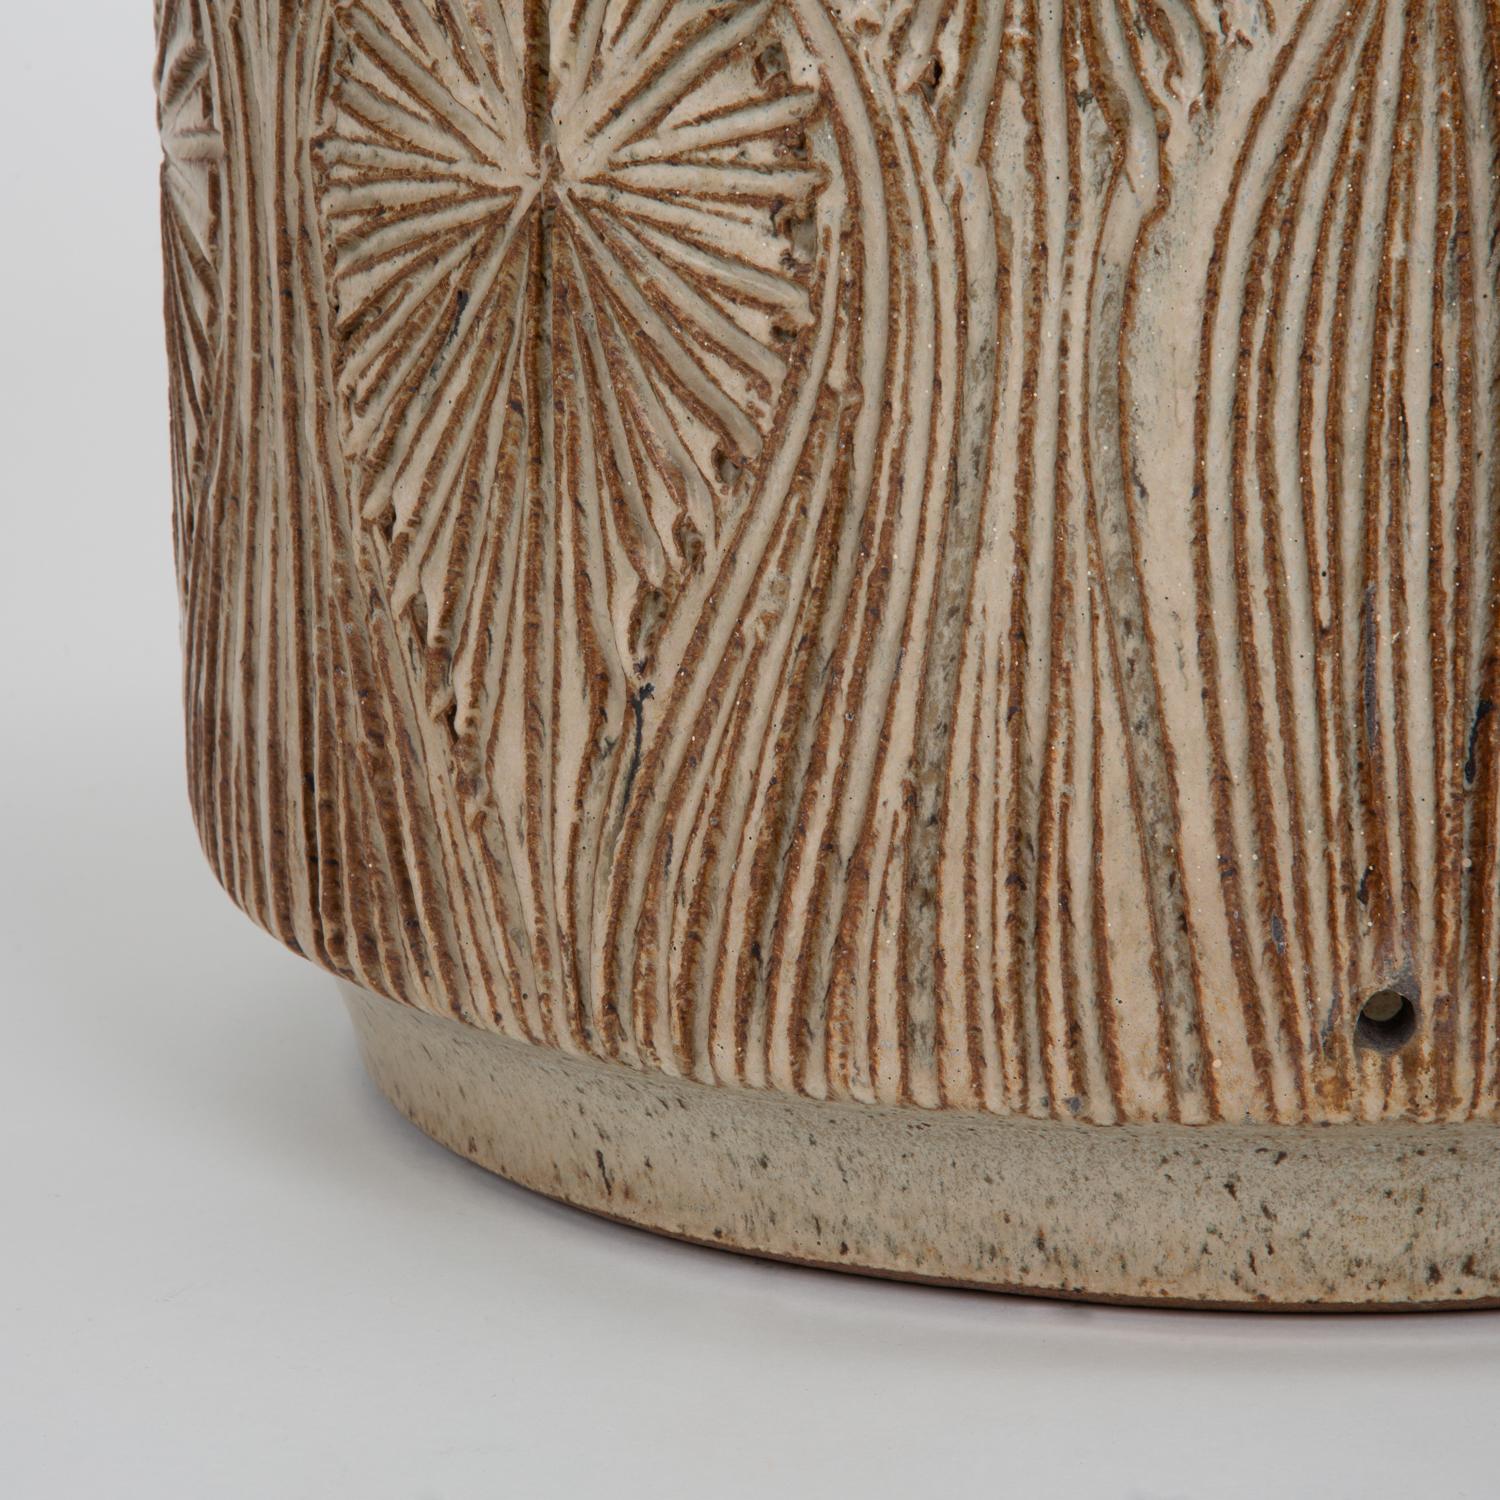 Stoneware “Teardrop Sunburst” Planter by Robert Maxwell and David Cressey for Earthgender